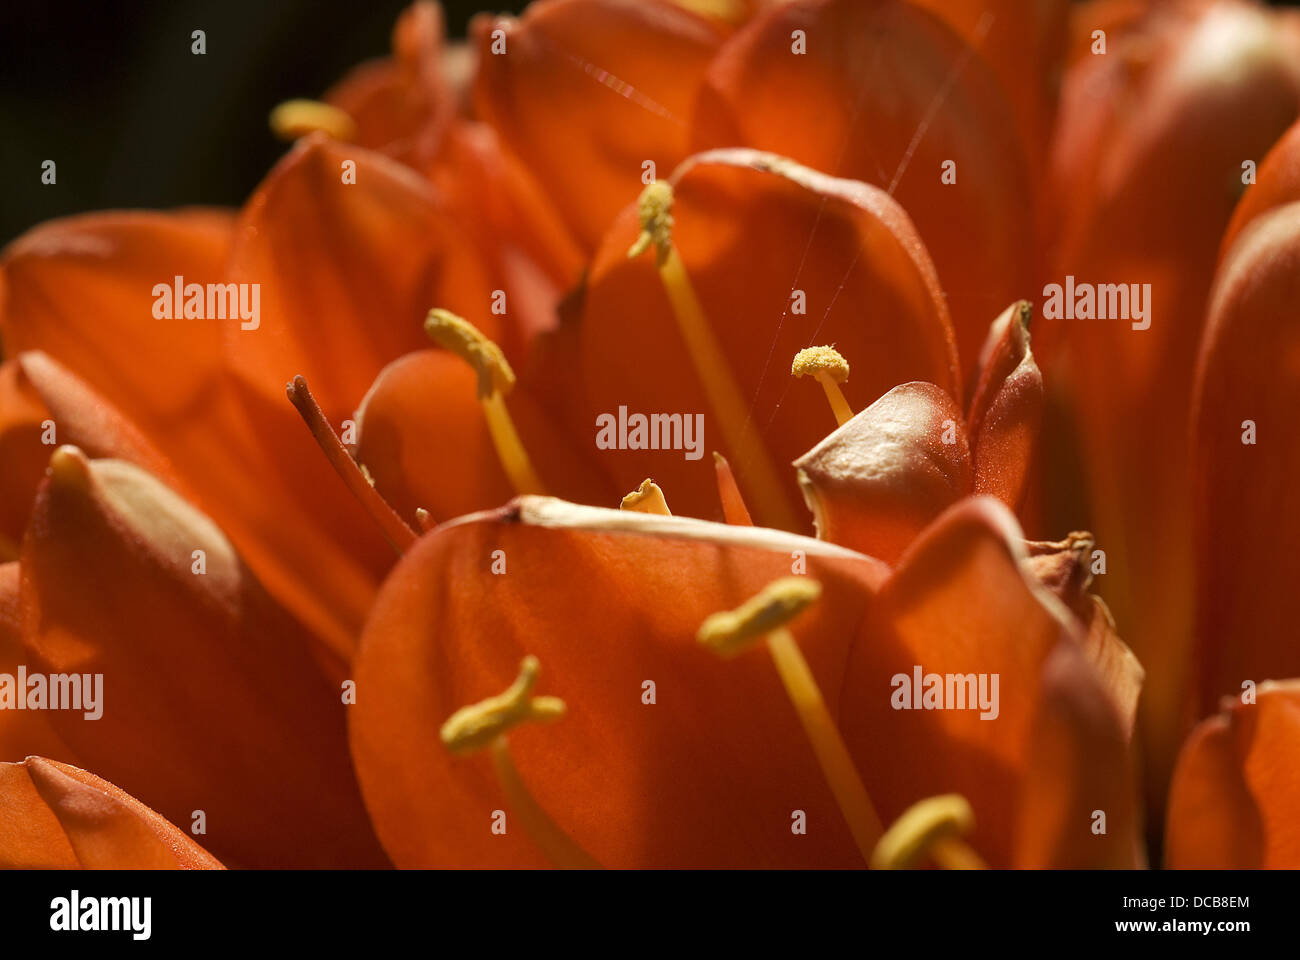 Kaffir Lily (Clivia miniata) Stock Photo